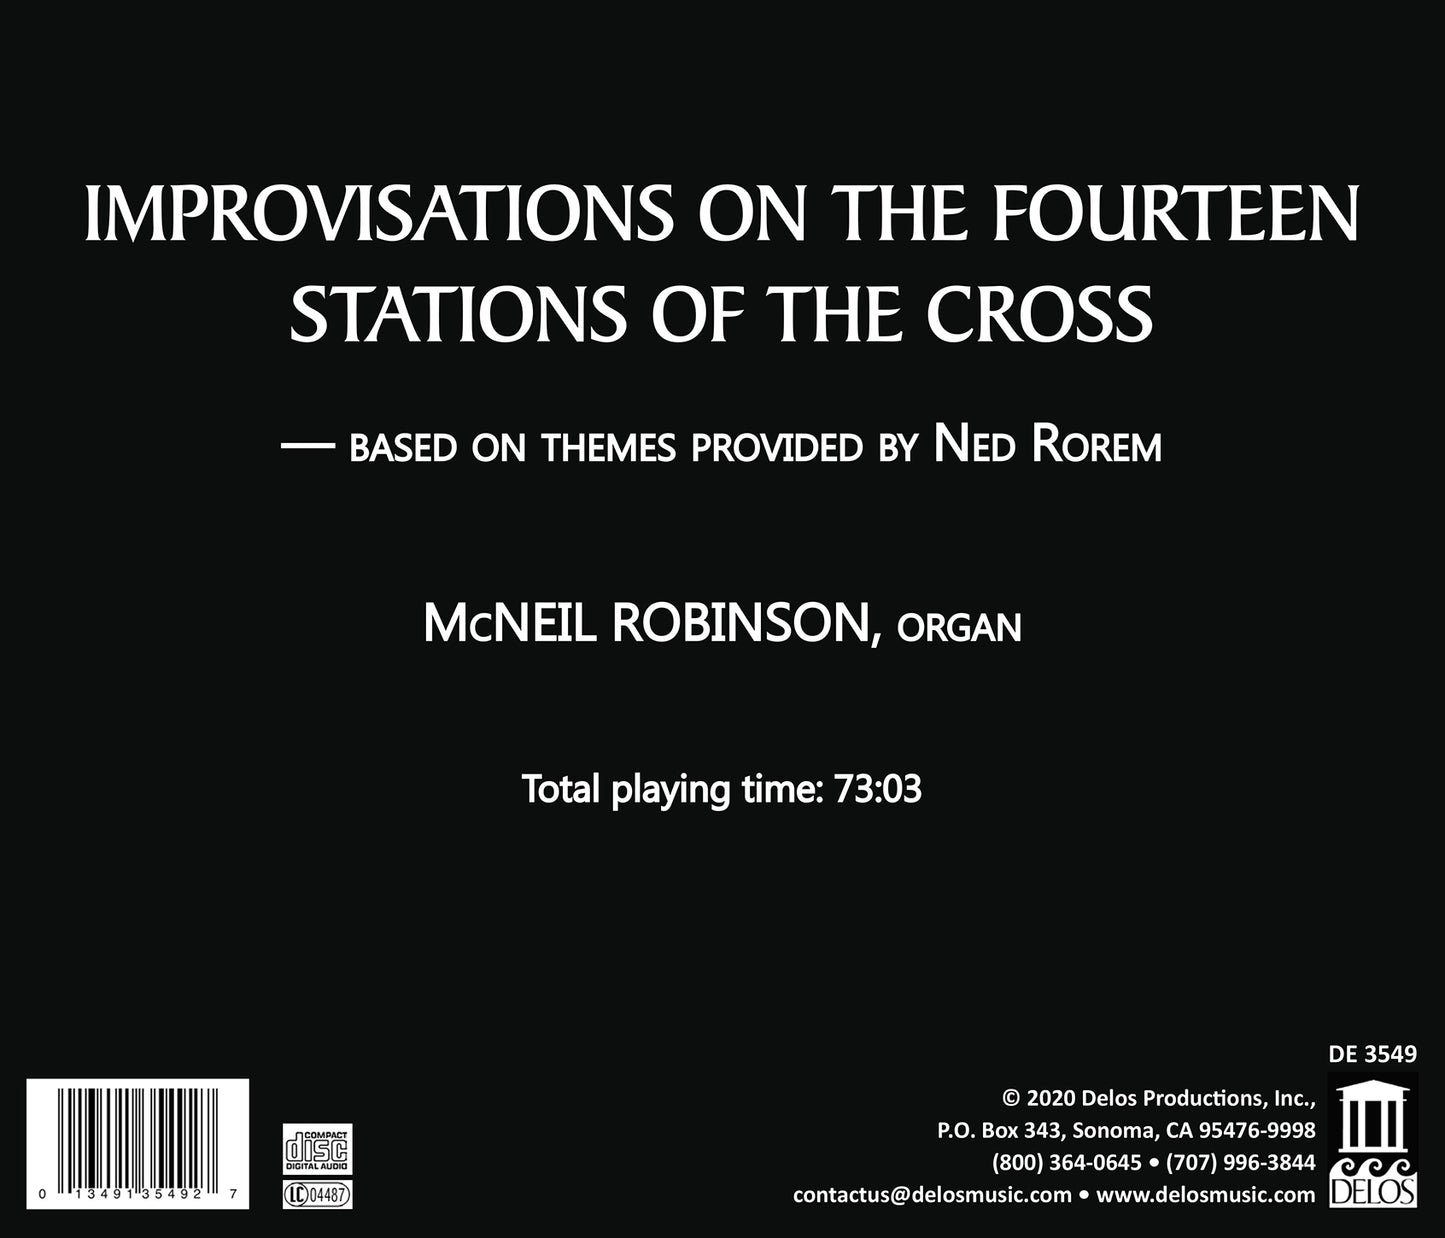 Stations Of The Cross - Organ Improvisations / McNeil Robinson